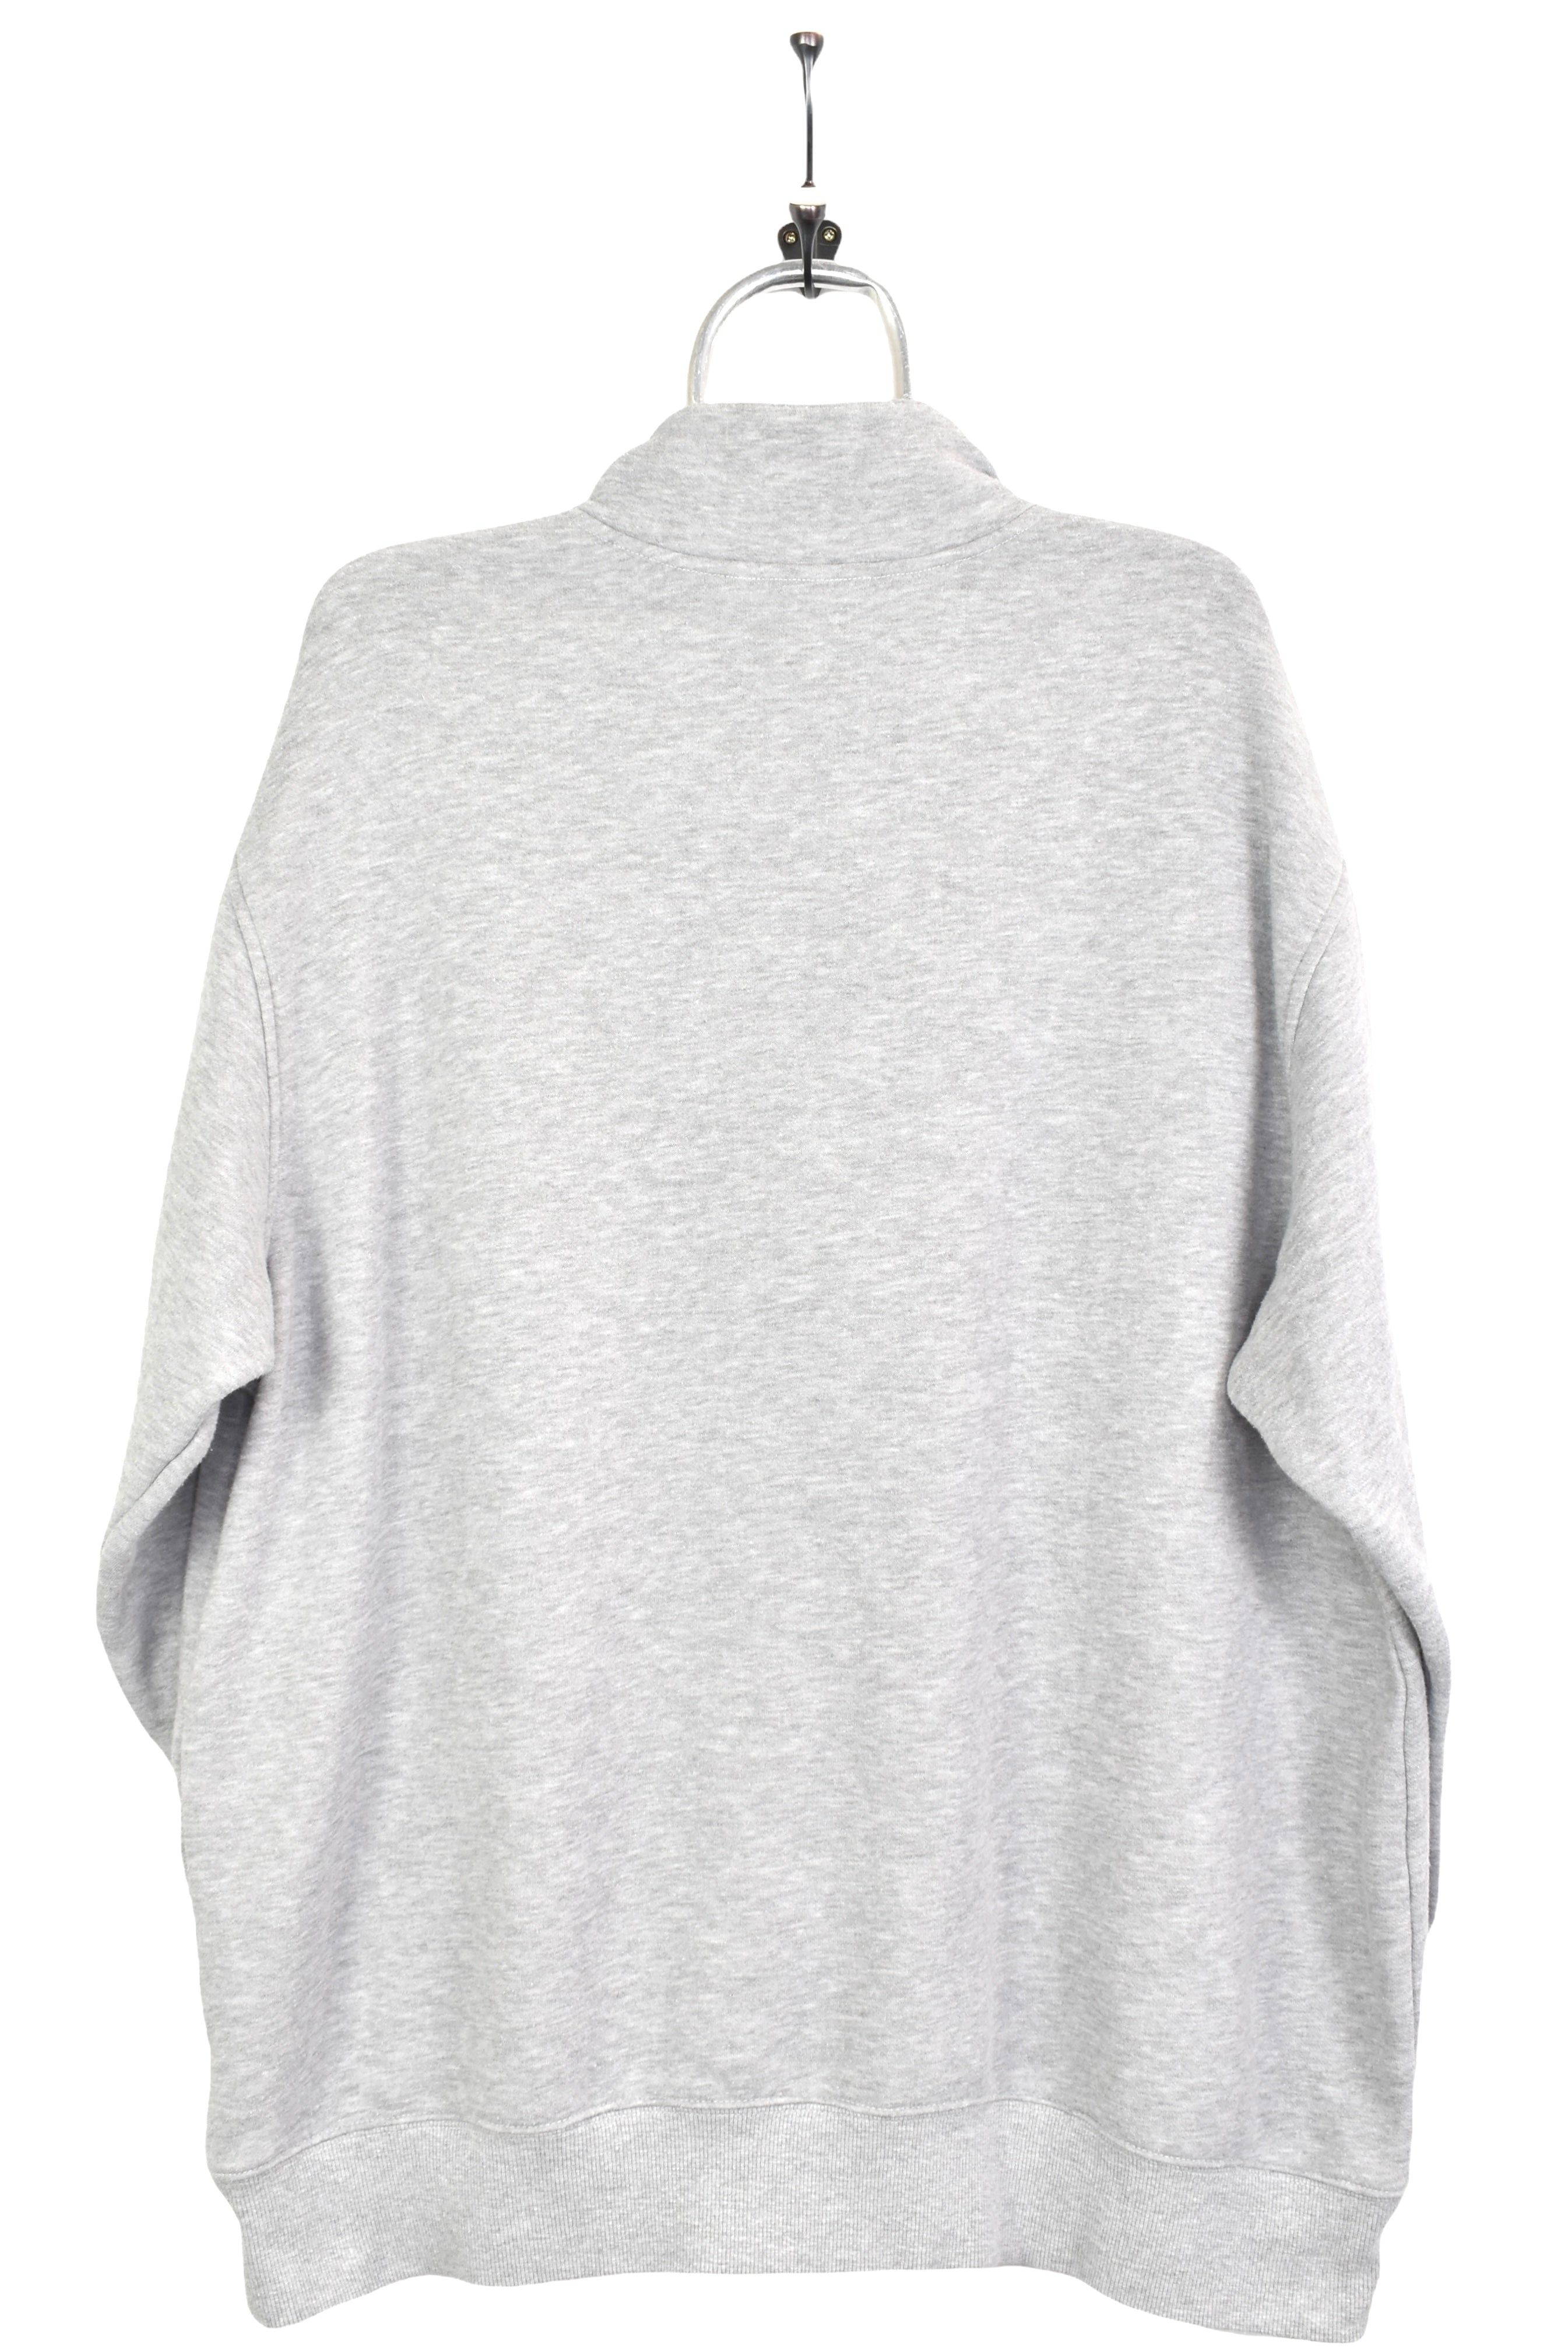 Vintage Adidas sweatshirt, embroidered 1/4 zip sweater - XXL, grey ADIDAS